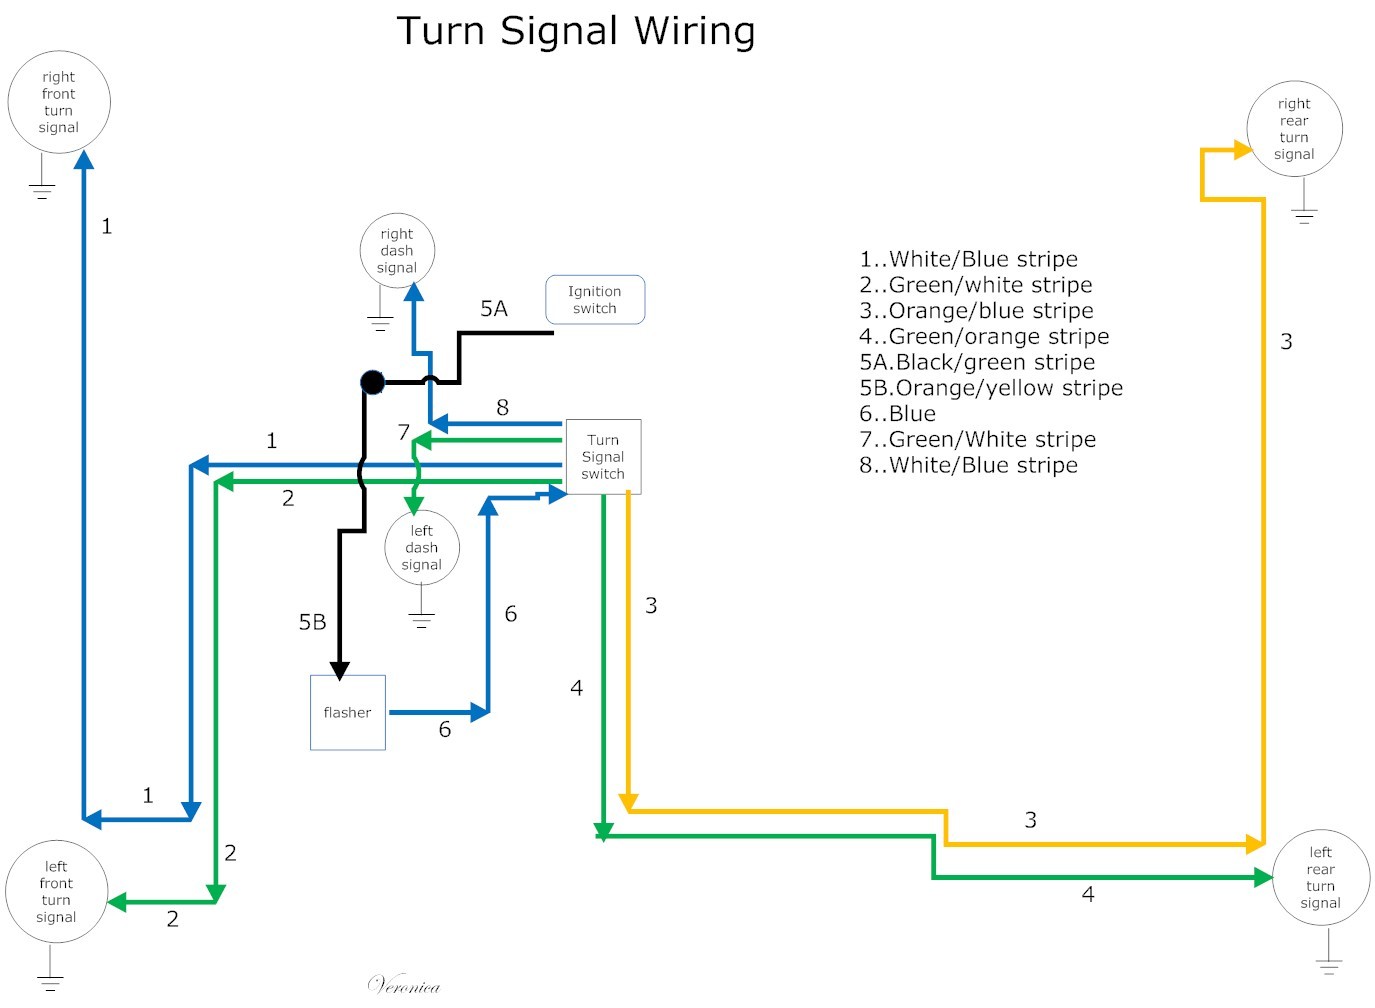 Turn signal Wiring